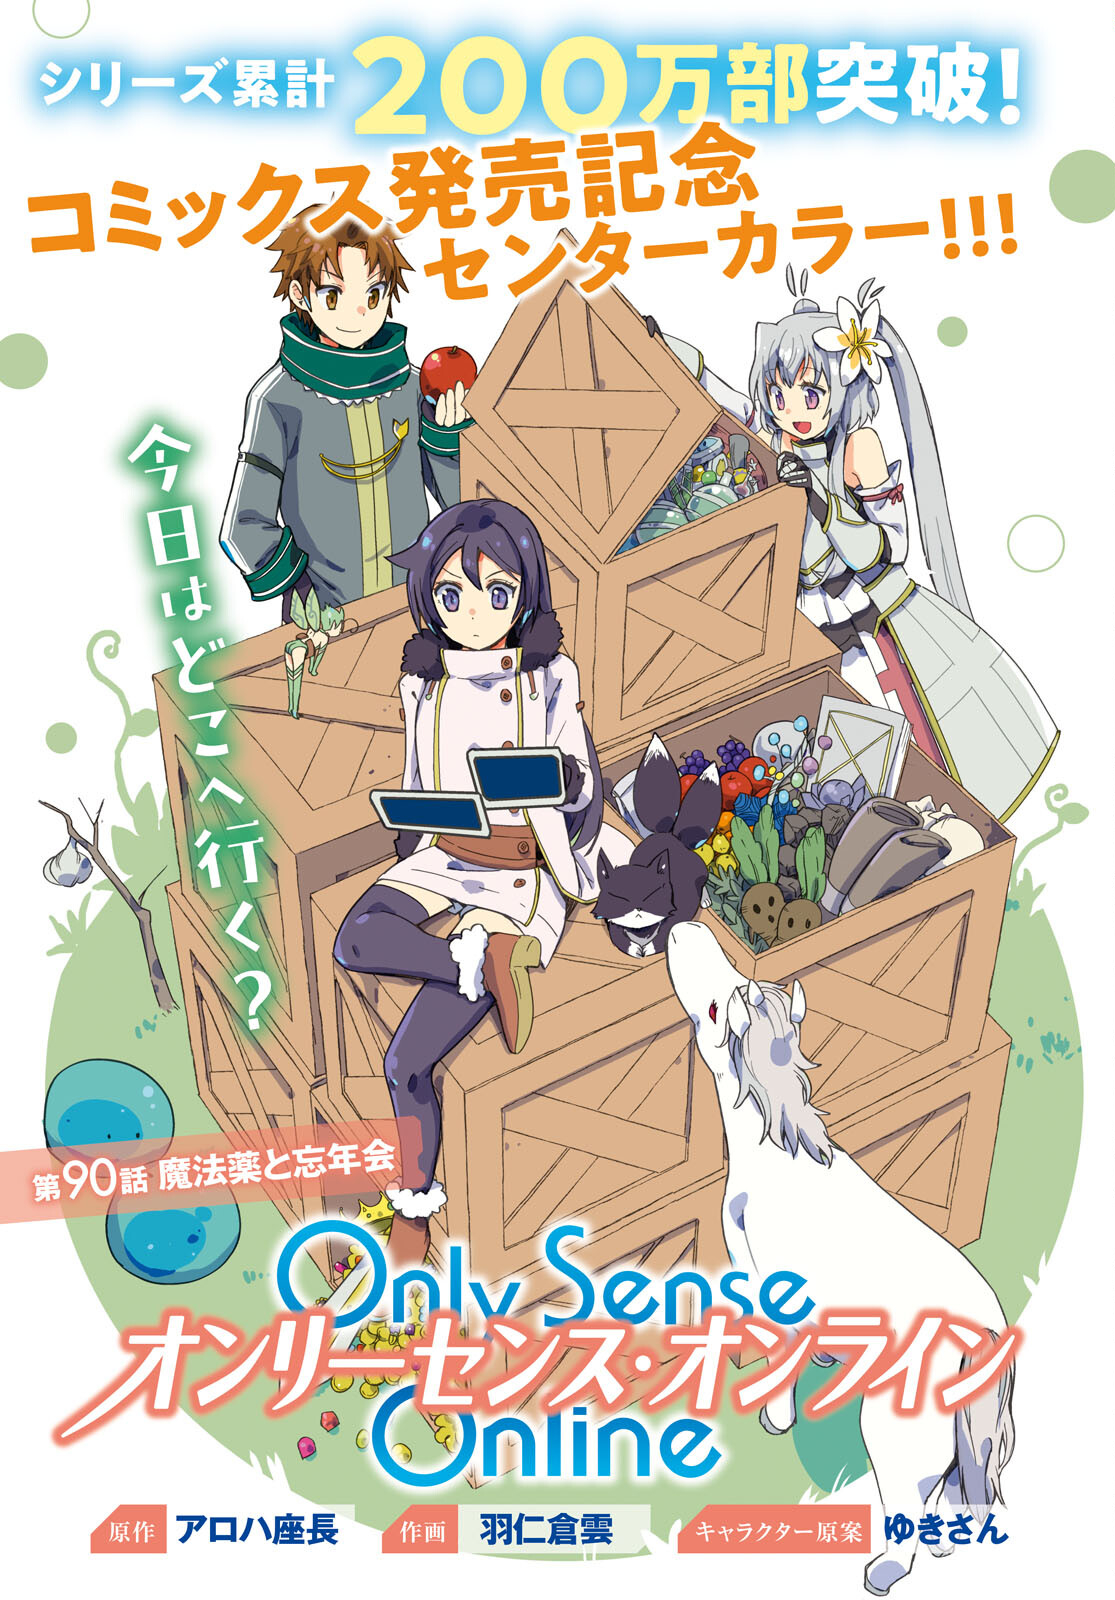 Only Sense Online 90